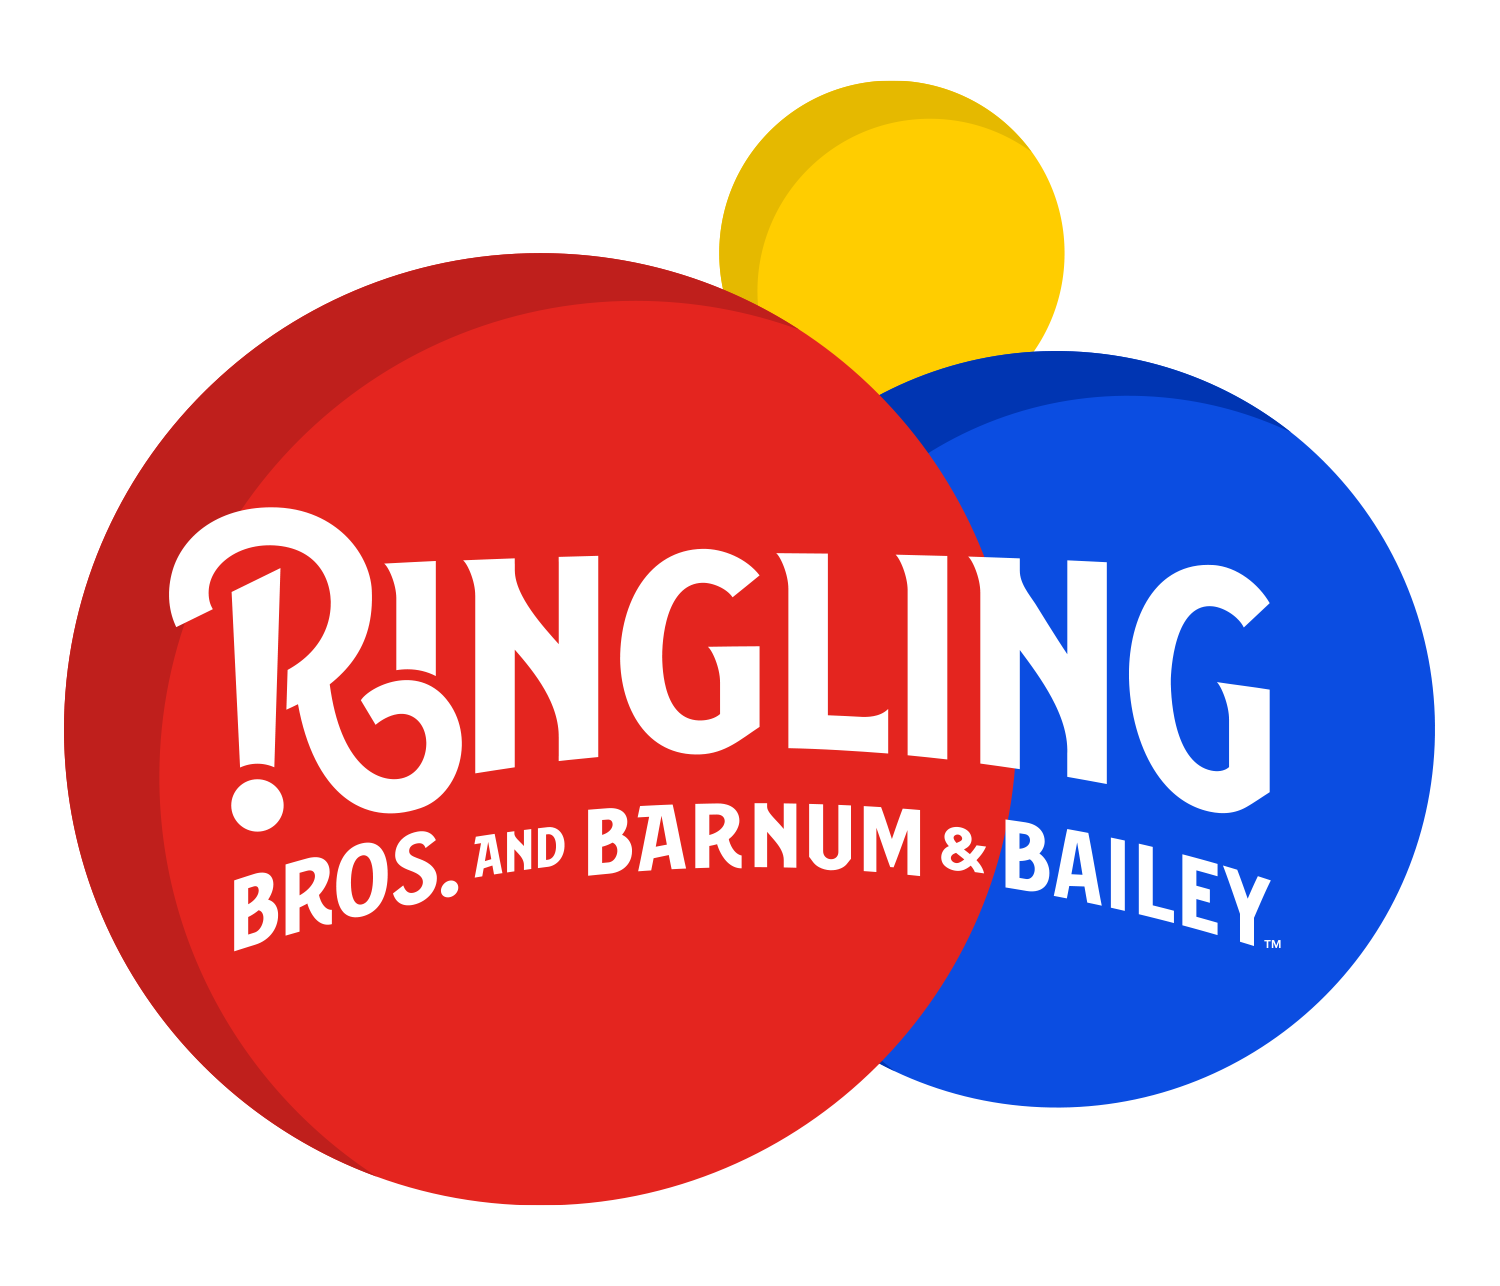 Ringling Bros. and Barnum & Bailey 3-dot logo